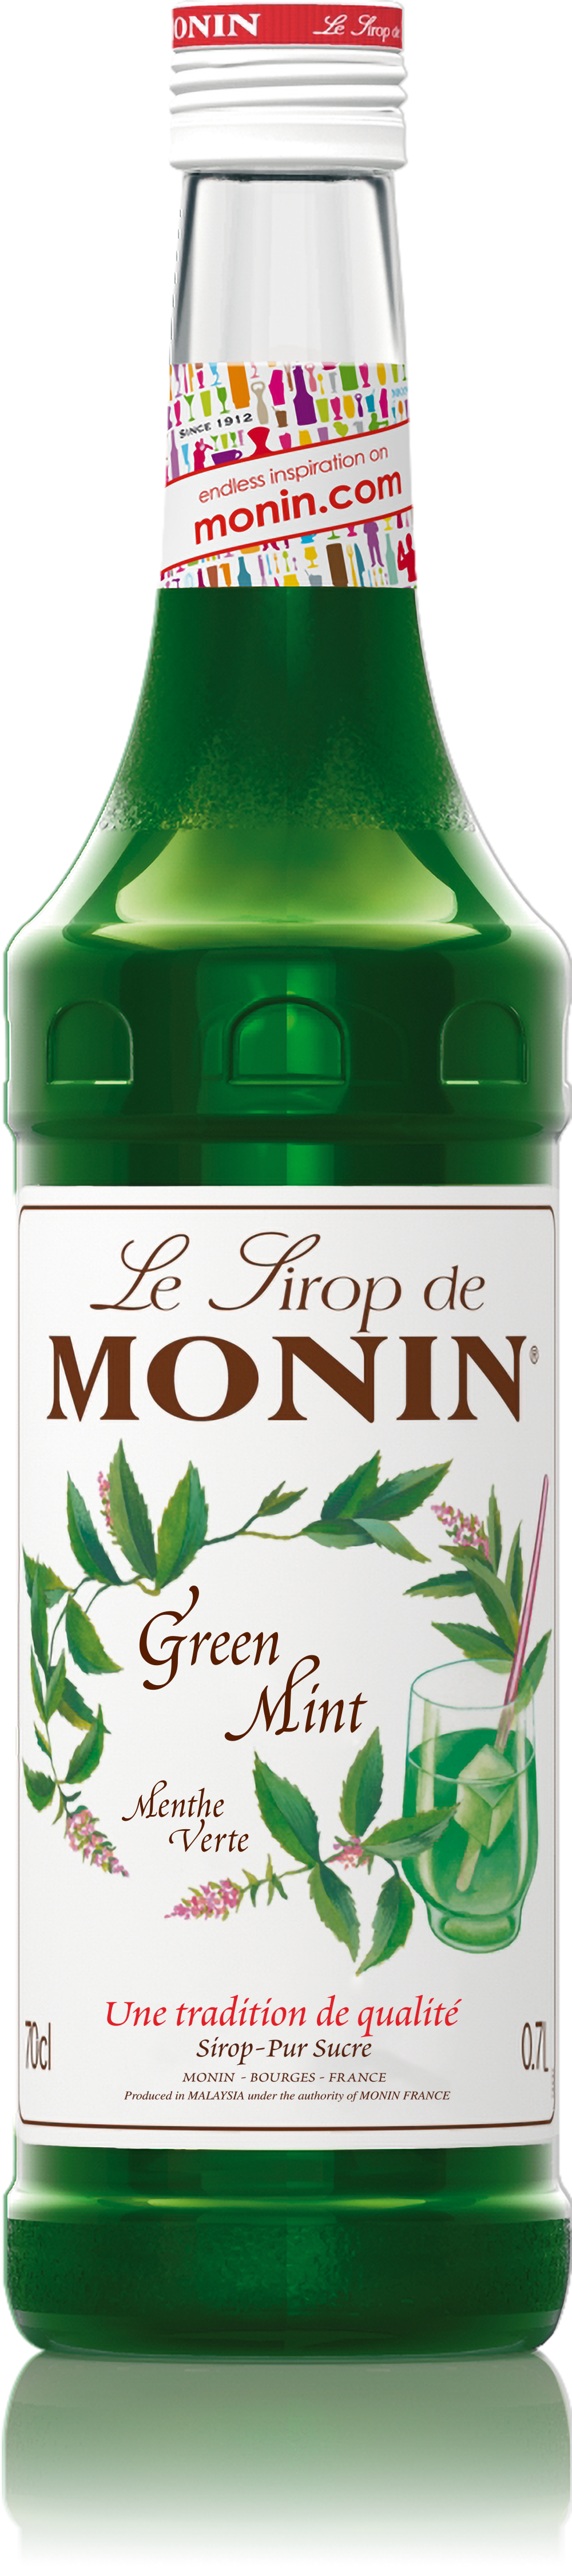 Le Sirop de MONIN Green Mint